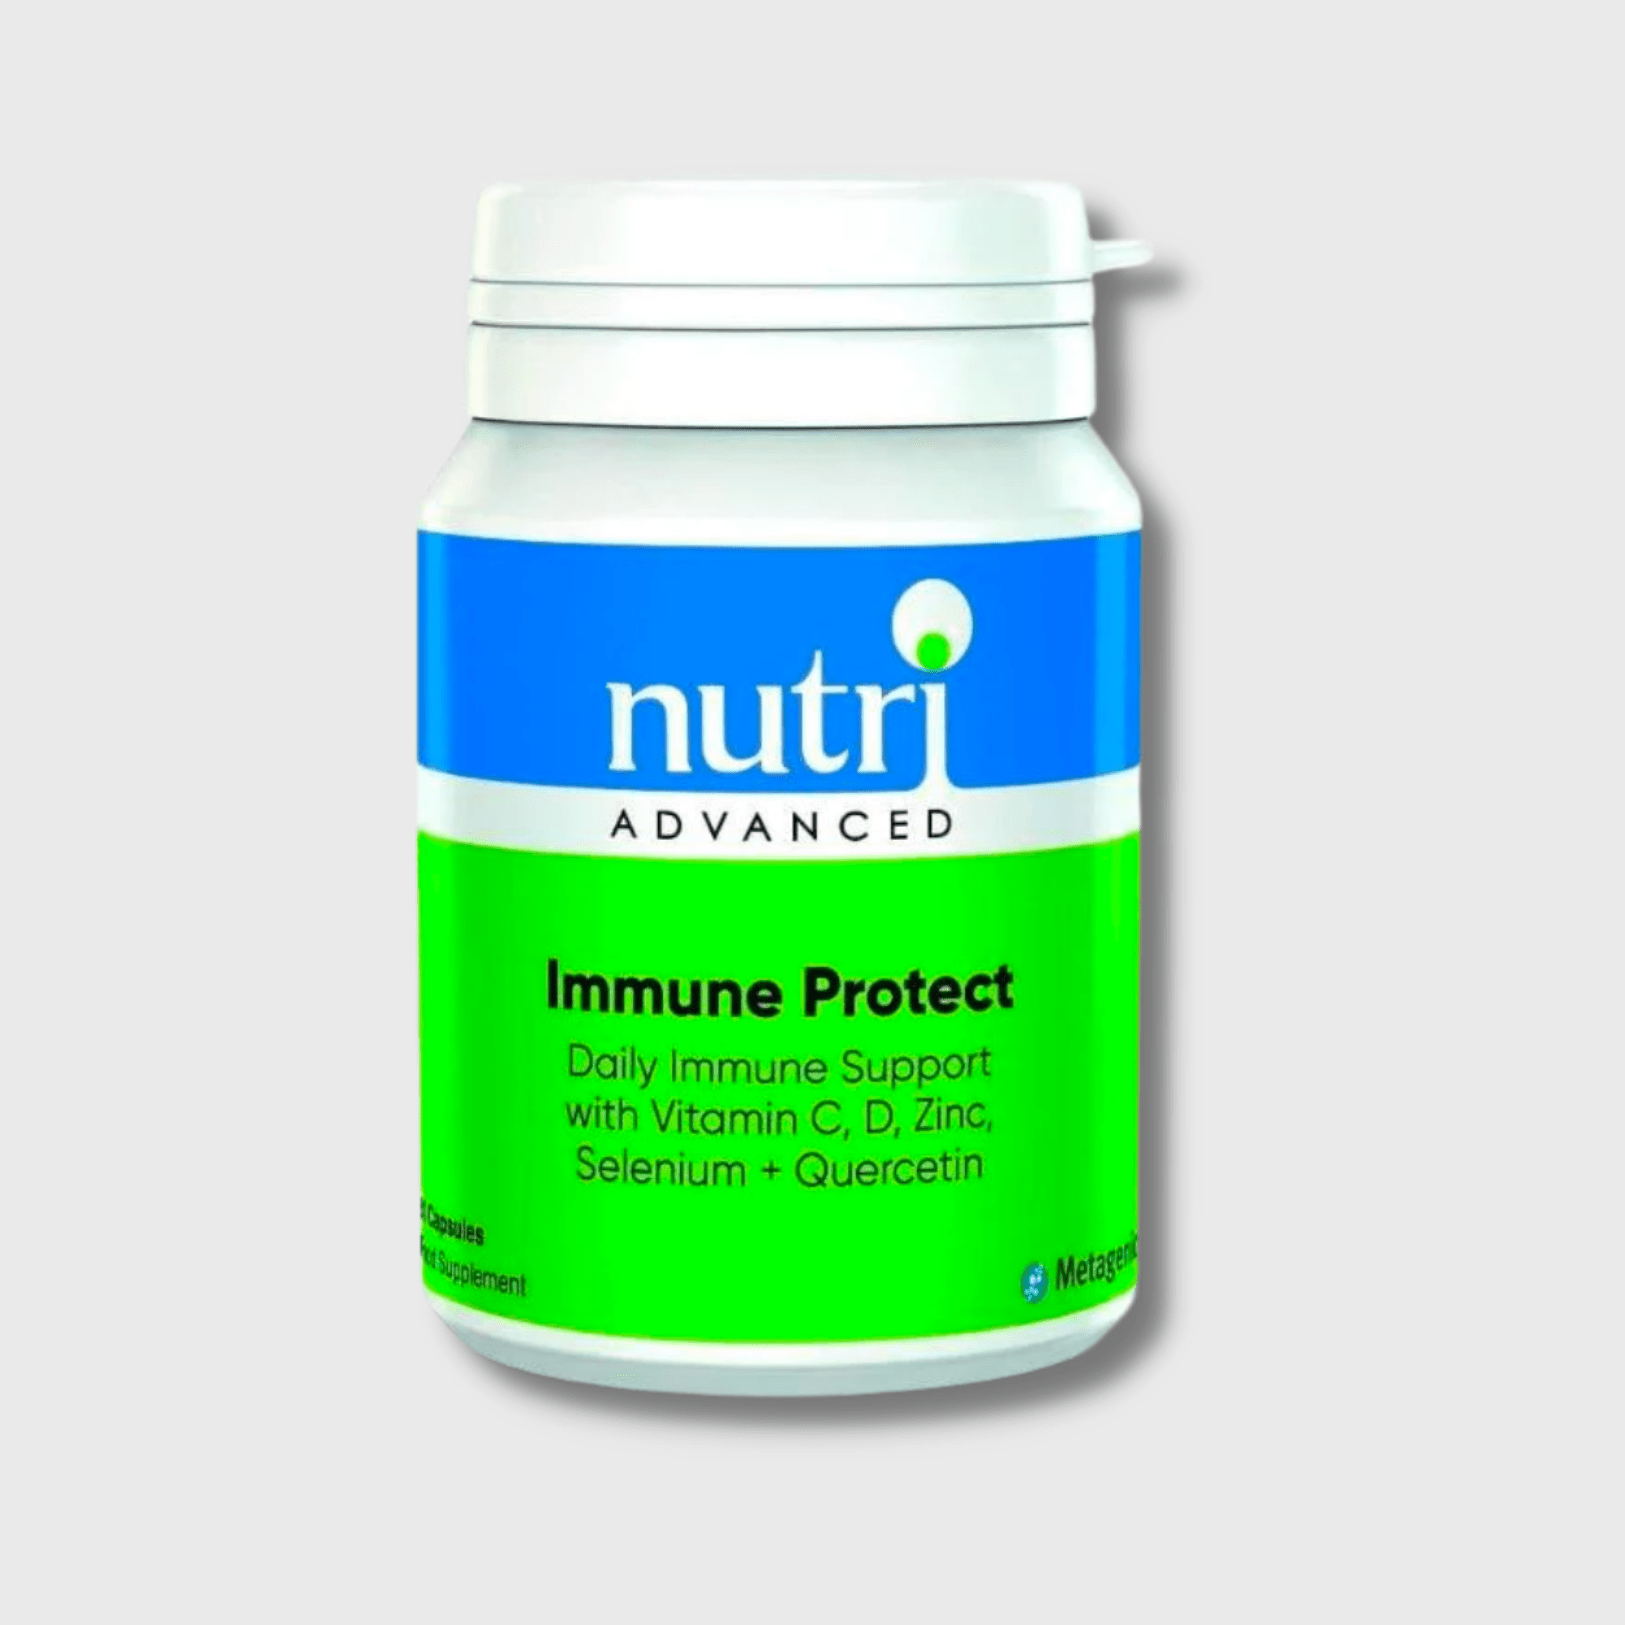 Immune Protect